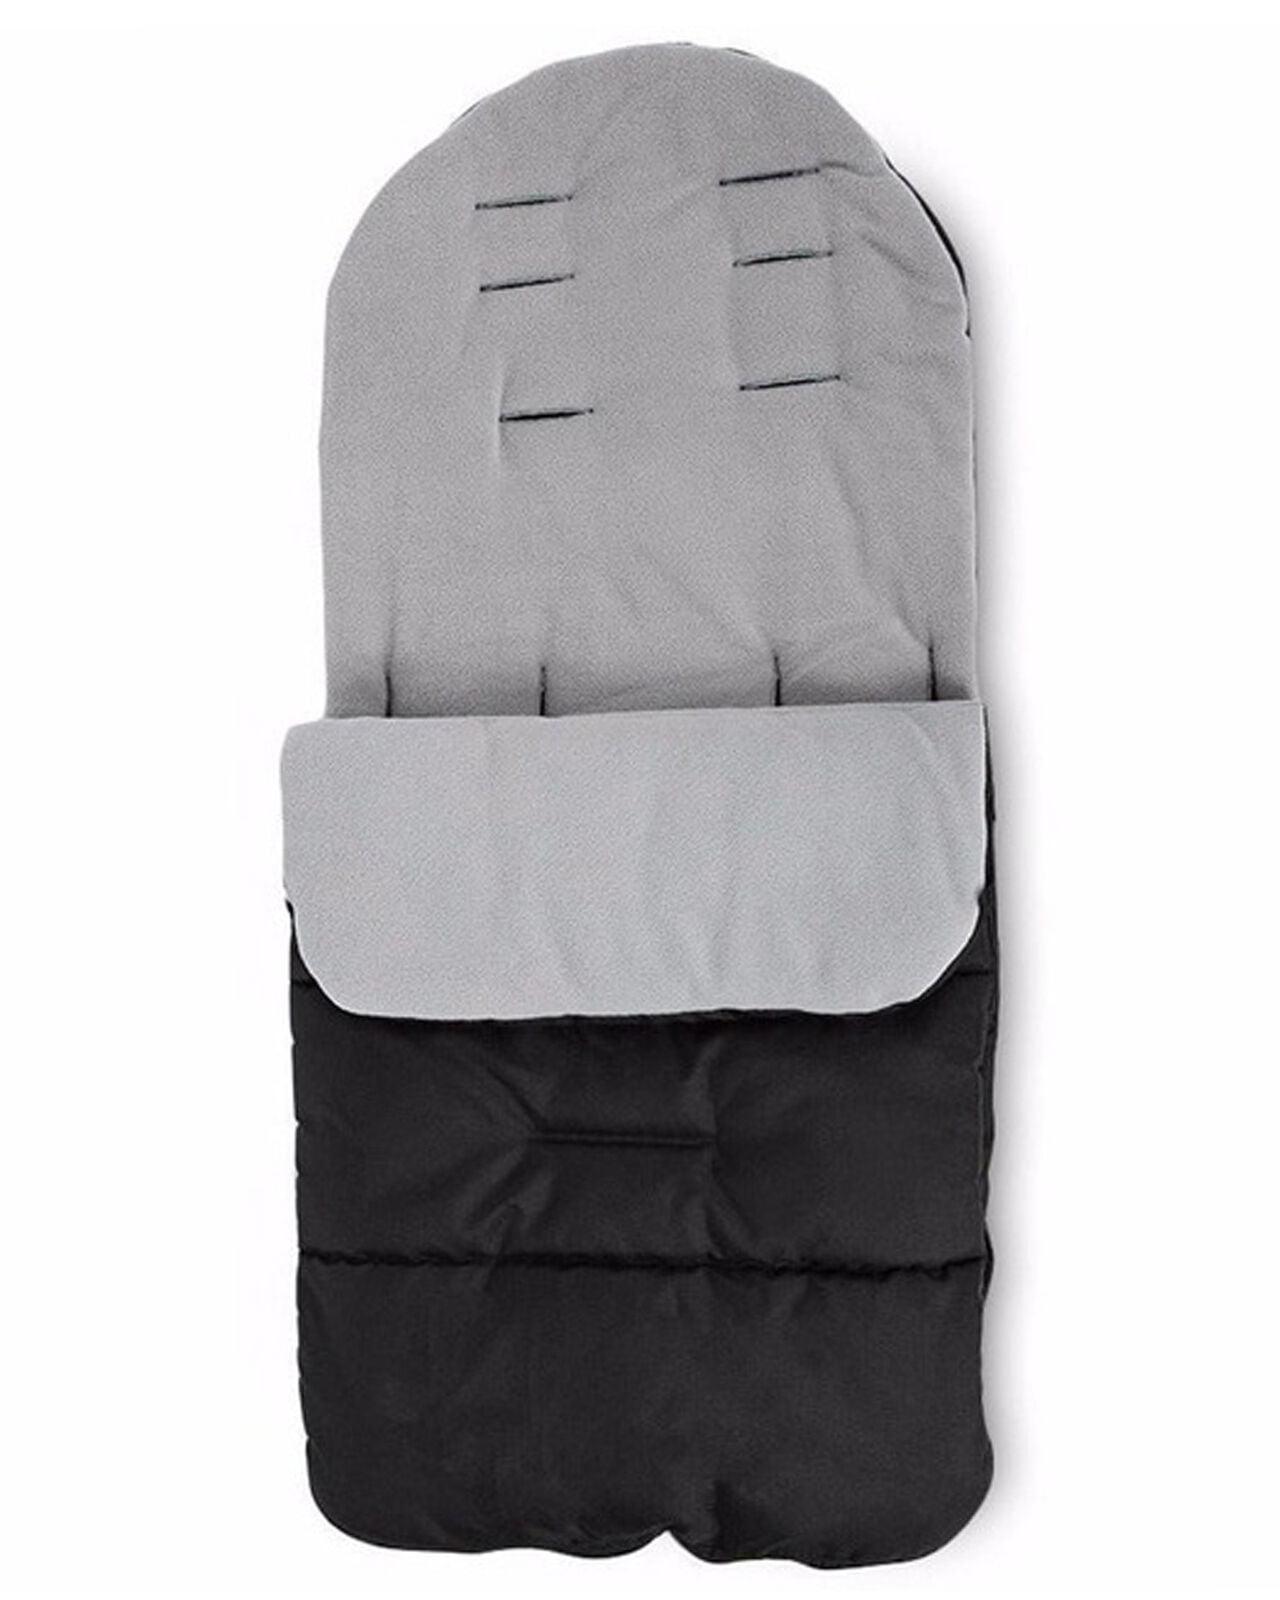 pushchair sleeping bag